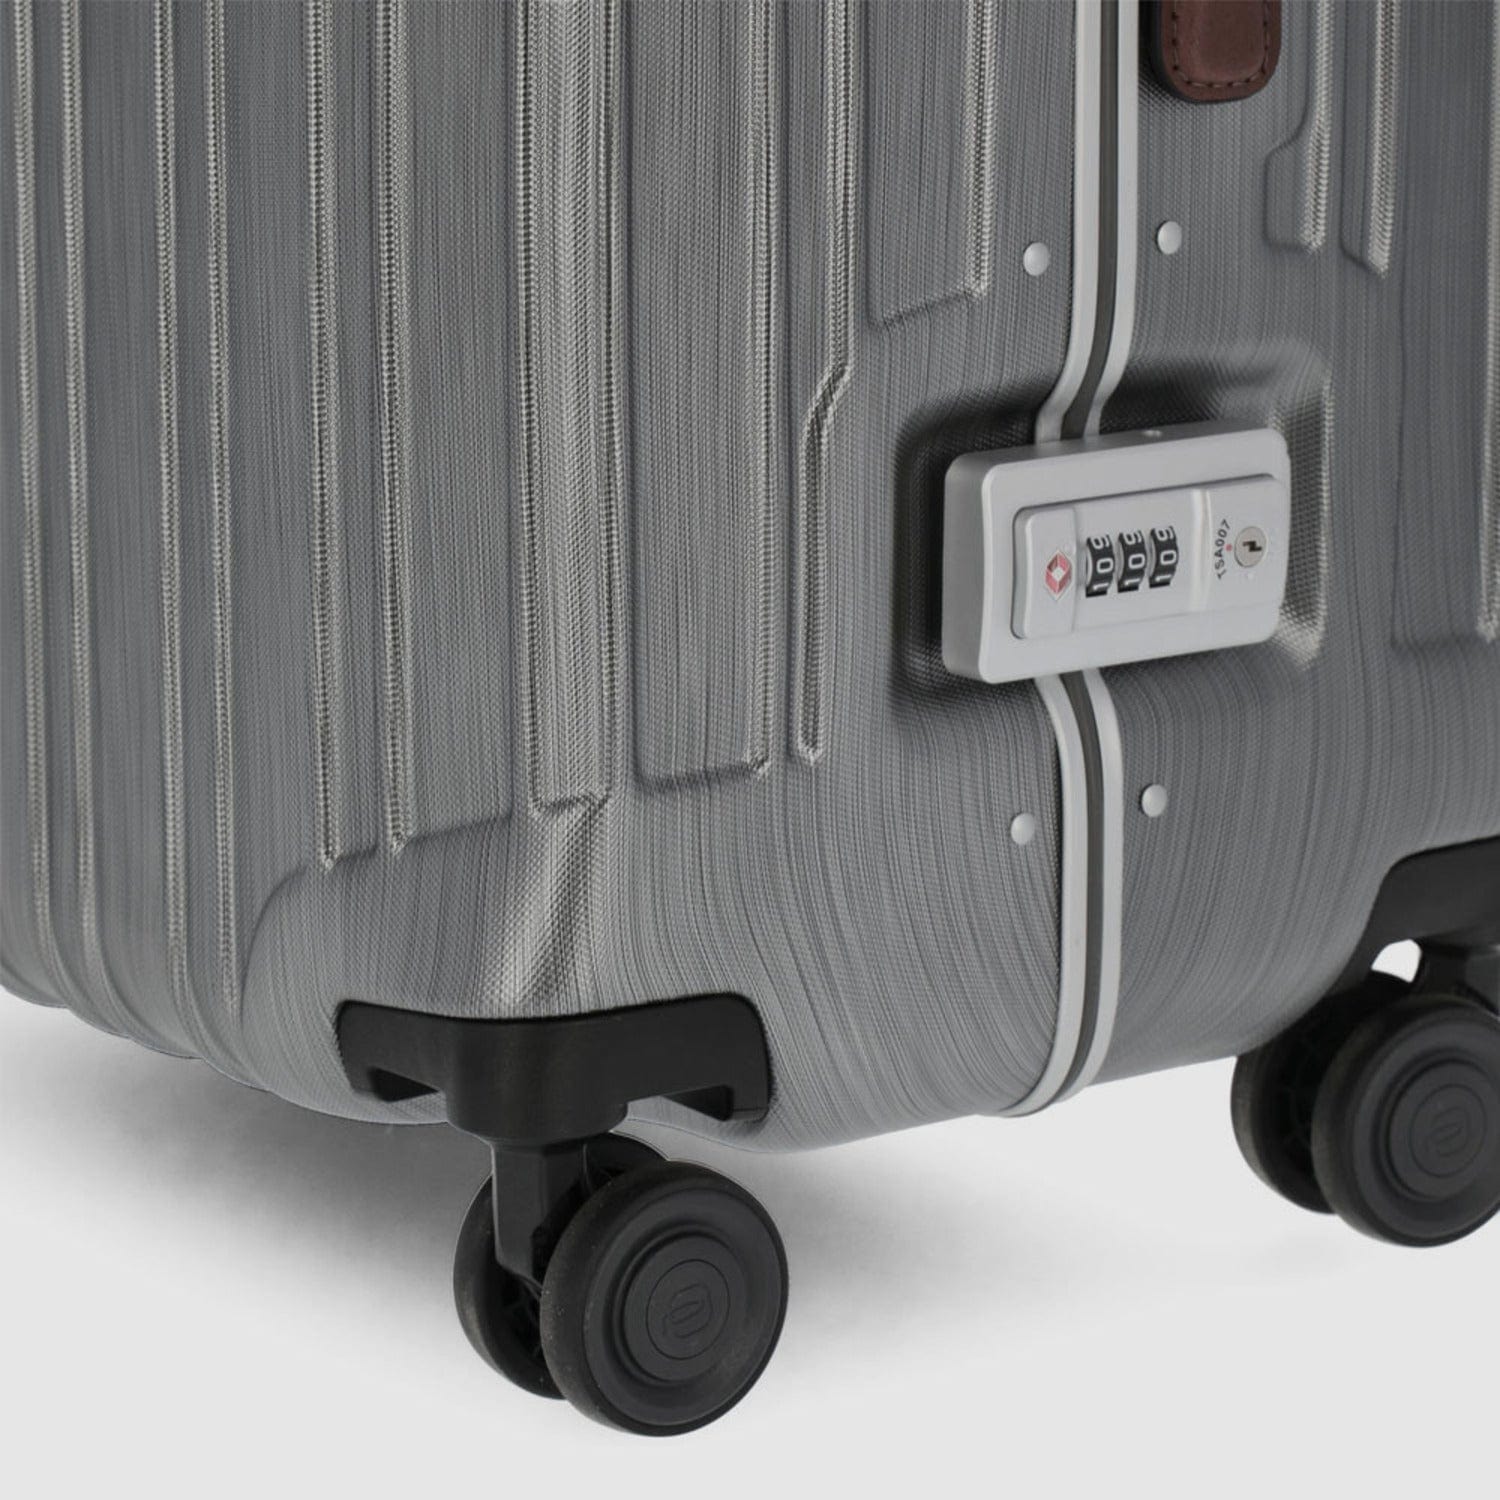 Piquadro Pqlm-Frame 75Cm Hardcase Large Check-In Luggage Trolley Black / Light Brown - Bv4428Pqlm/Ncu